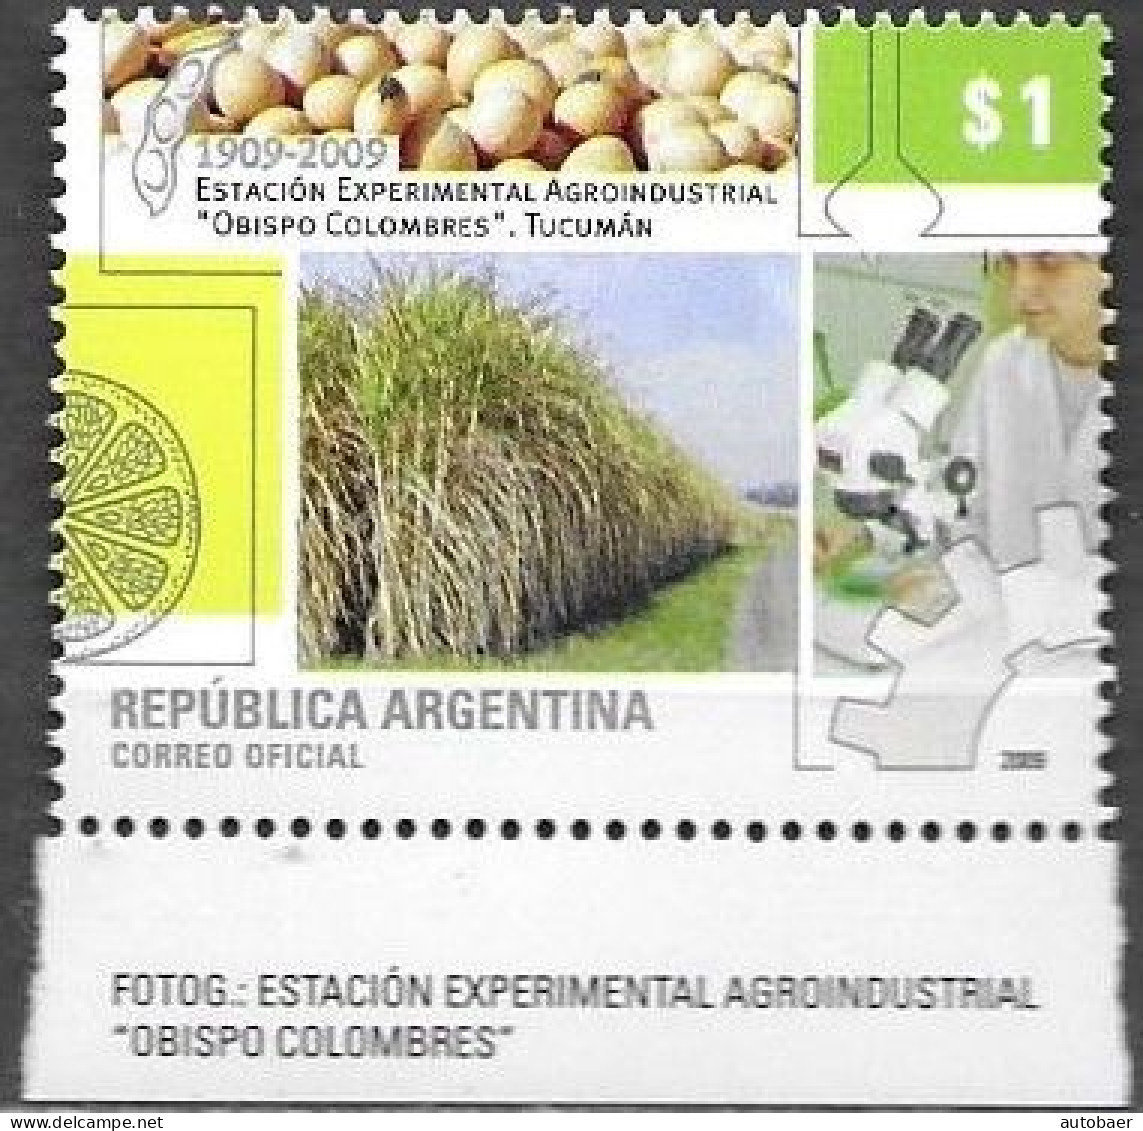 Argentina 2009 Agroindustrial Station Estacion Bishop Obispo Colombres Tucuman Michel 3254 MNH Postfrisch Neuf ** - Nuevos